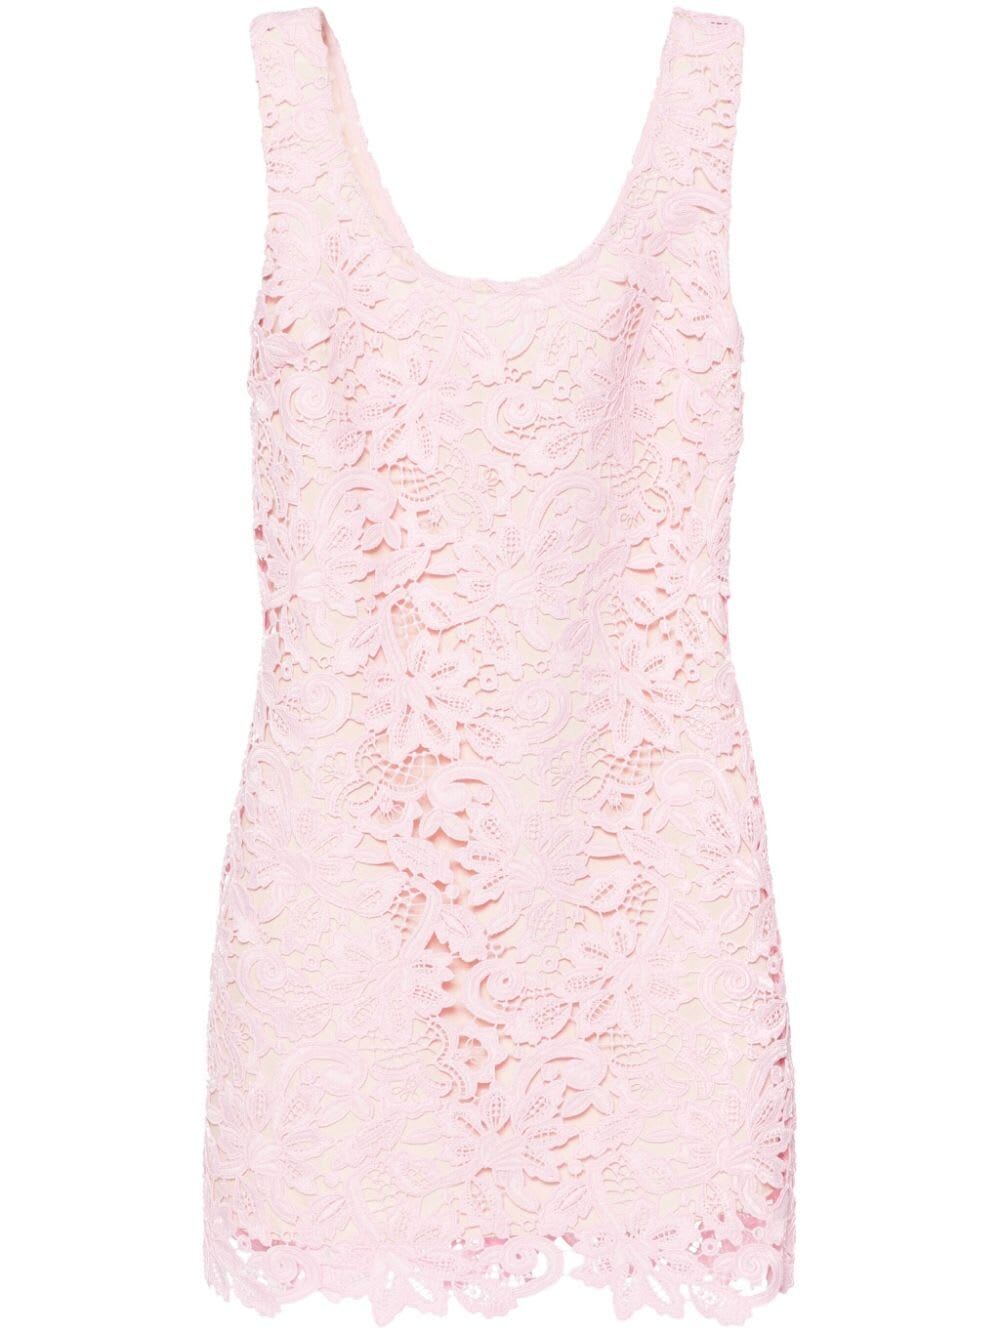 Pink Floral Lace Mini Dress